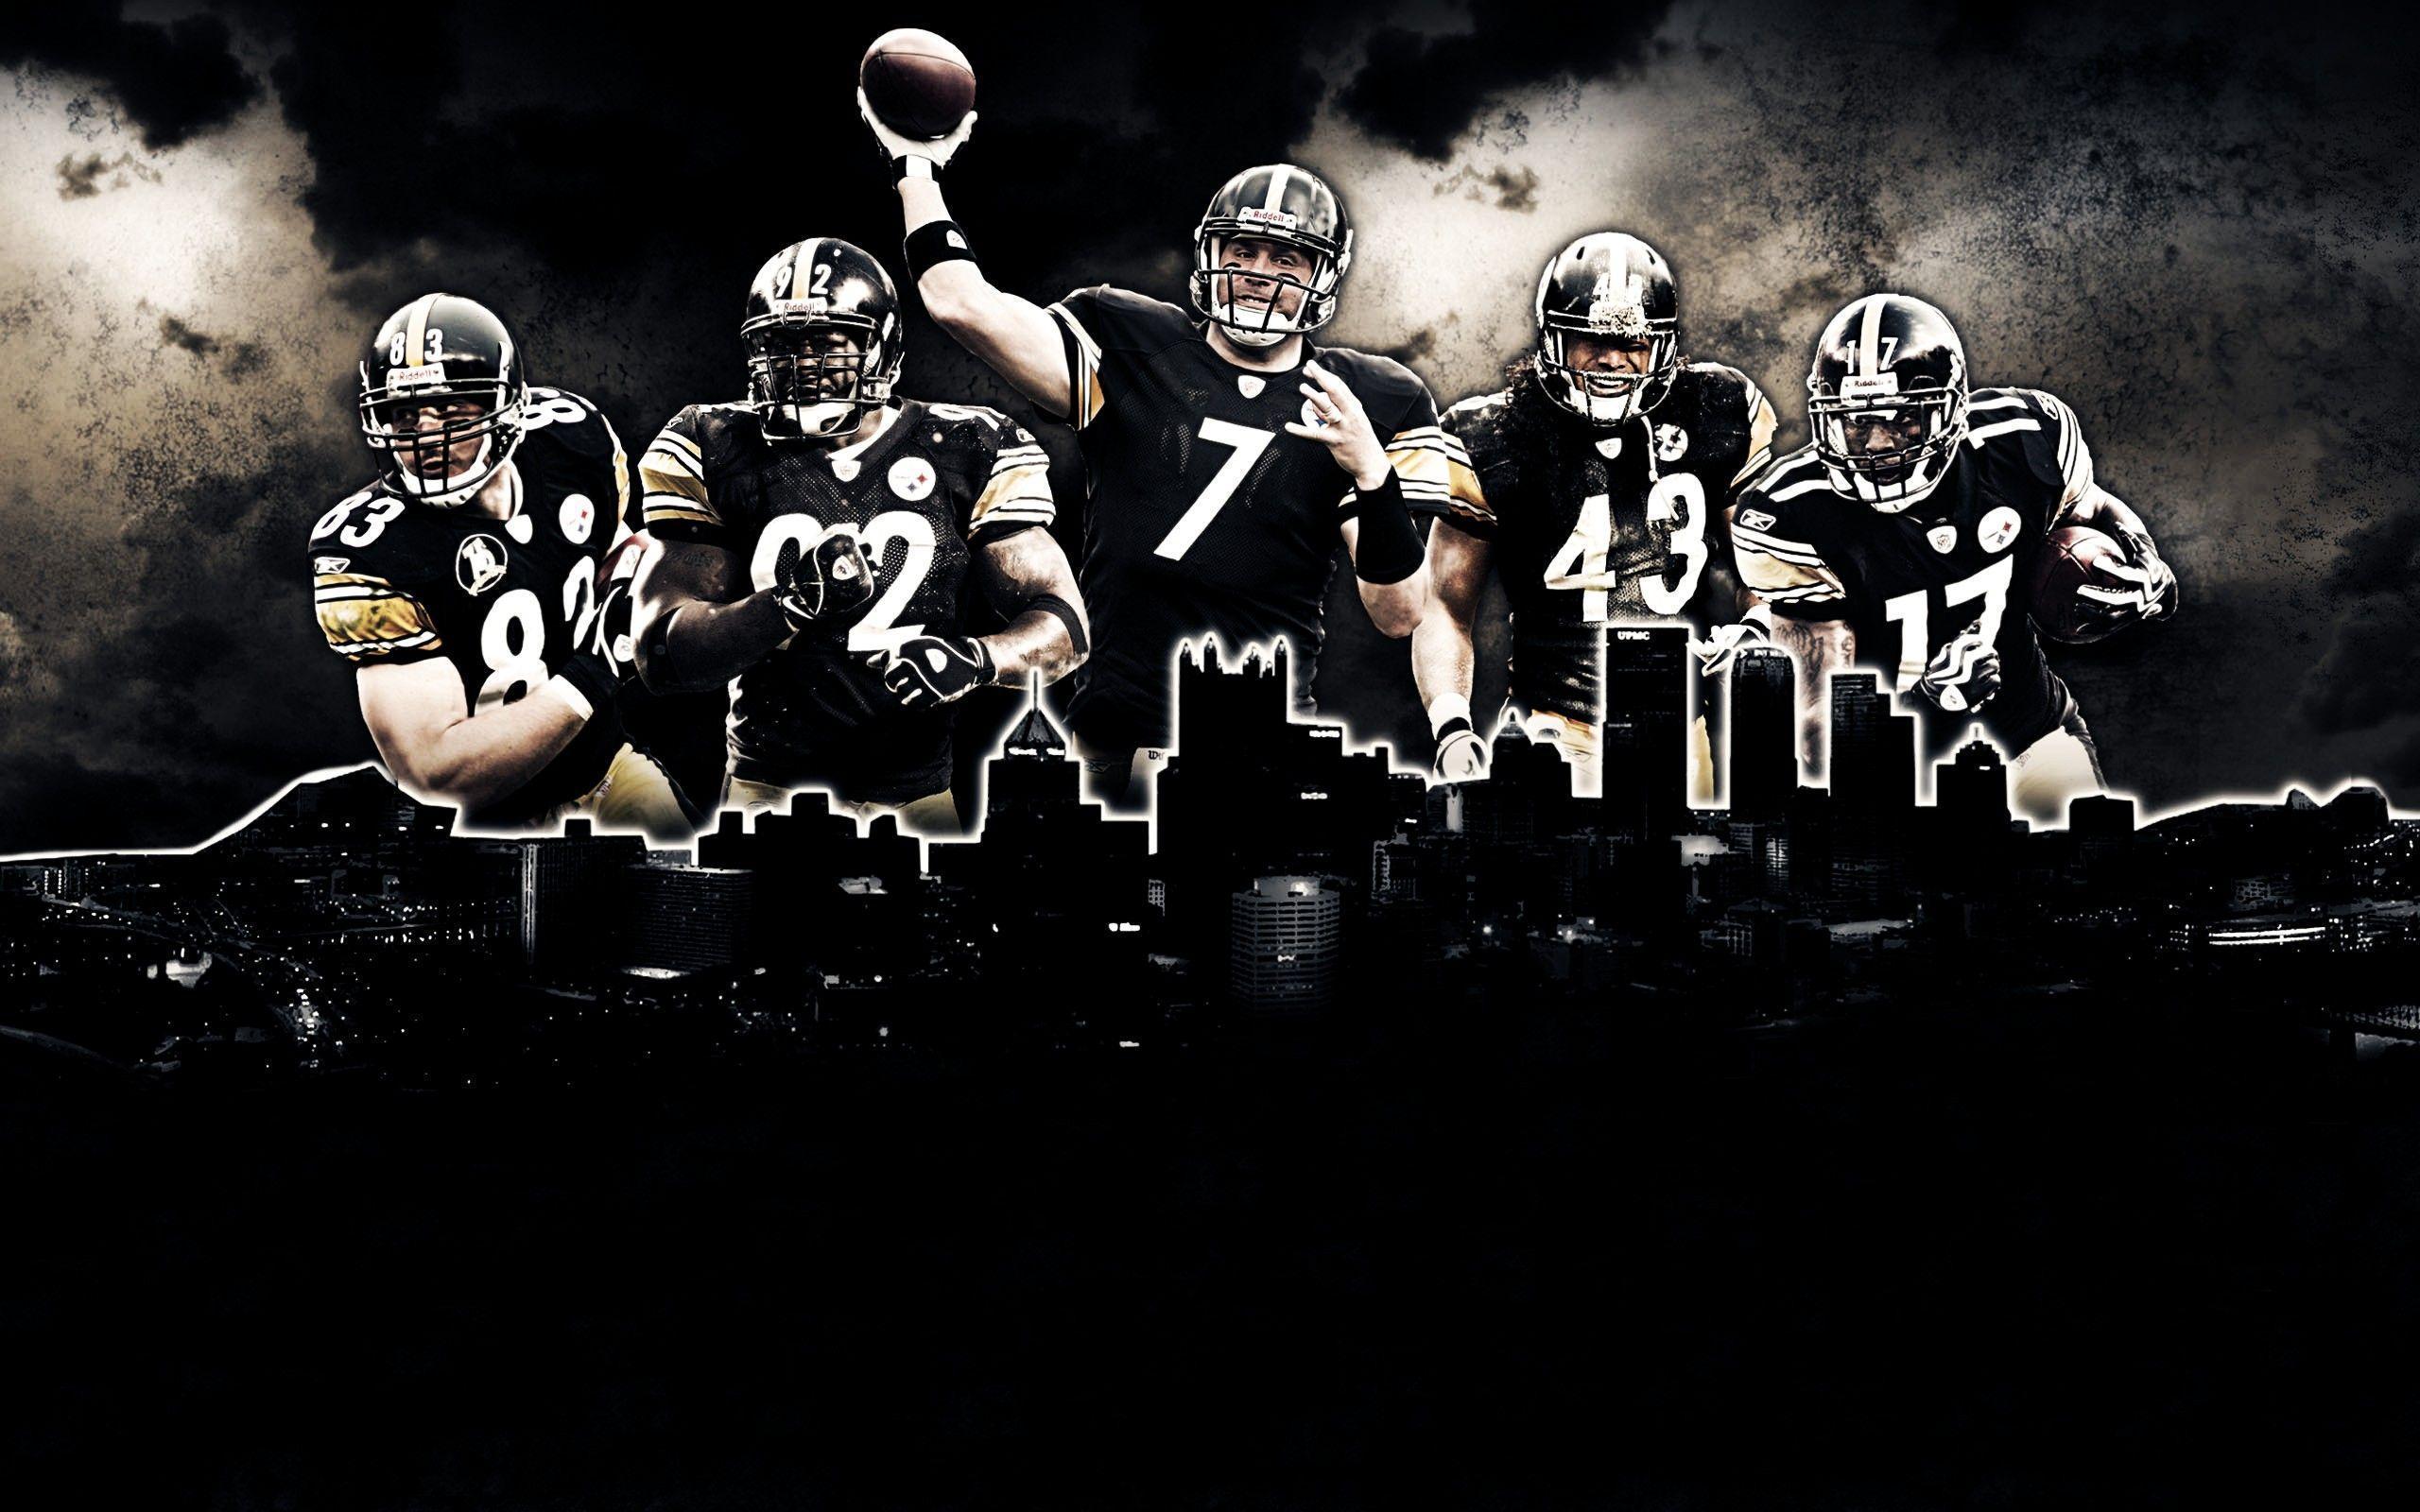 Pittsburgh Steelers Desktop Wallpaper Submited Image